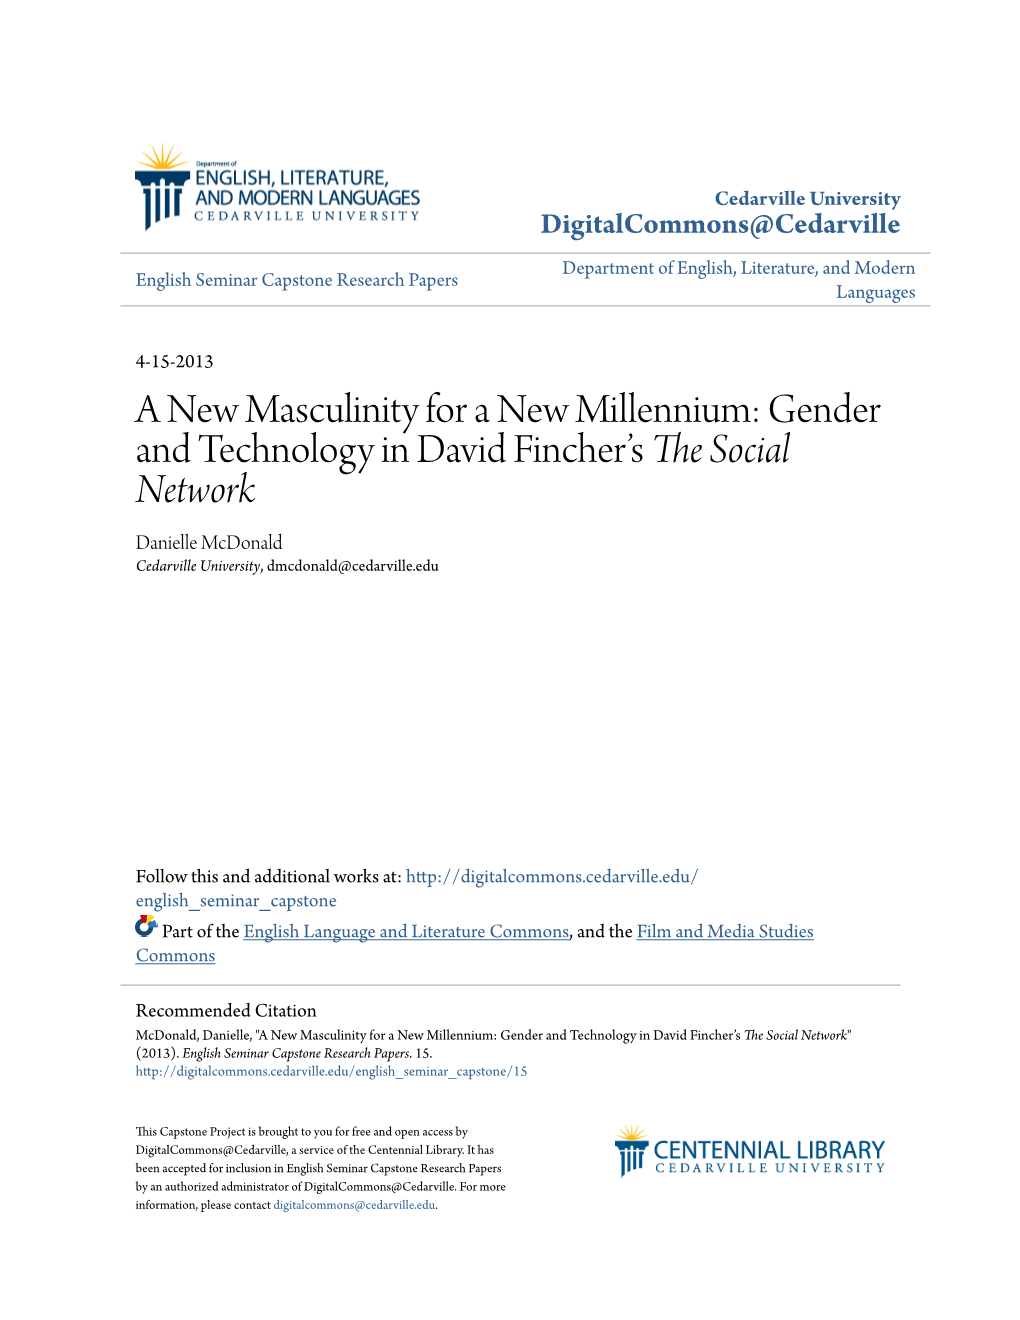 Gender and Technology in David Fincher's &lt;I&gt;The Social Network&lt;/I&gt;